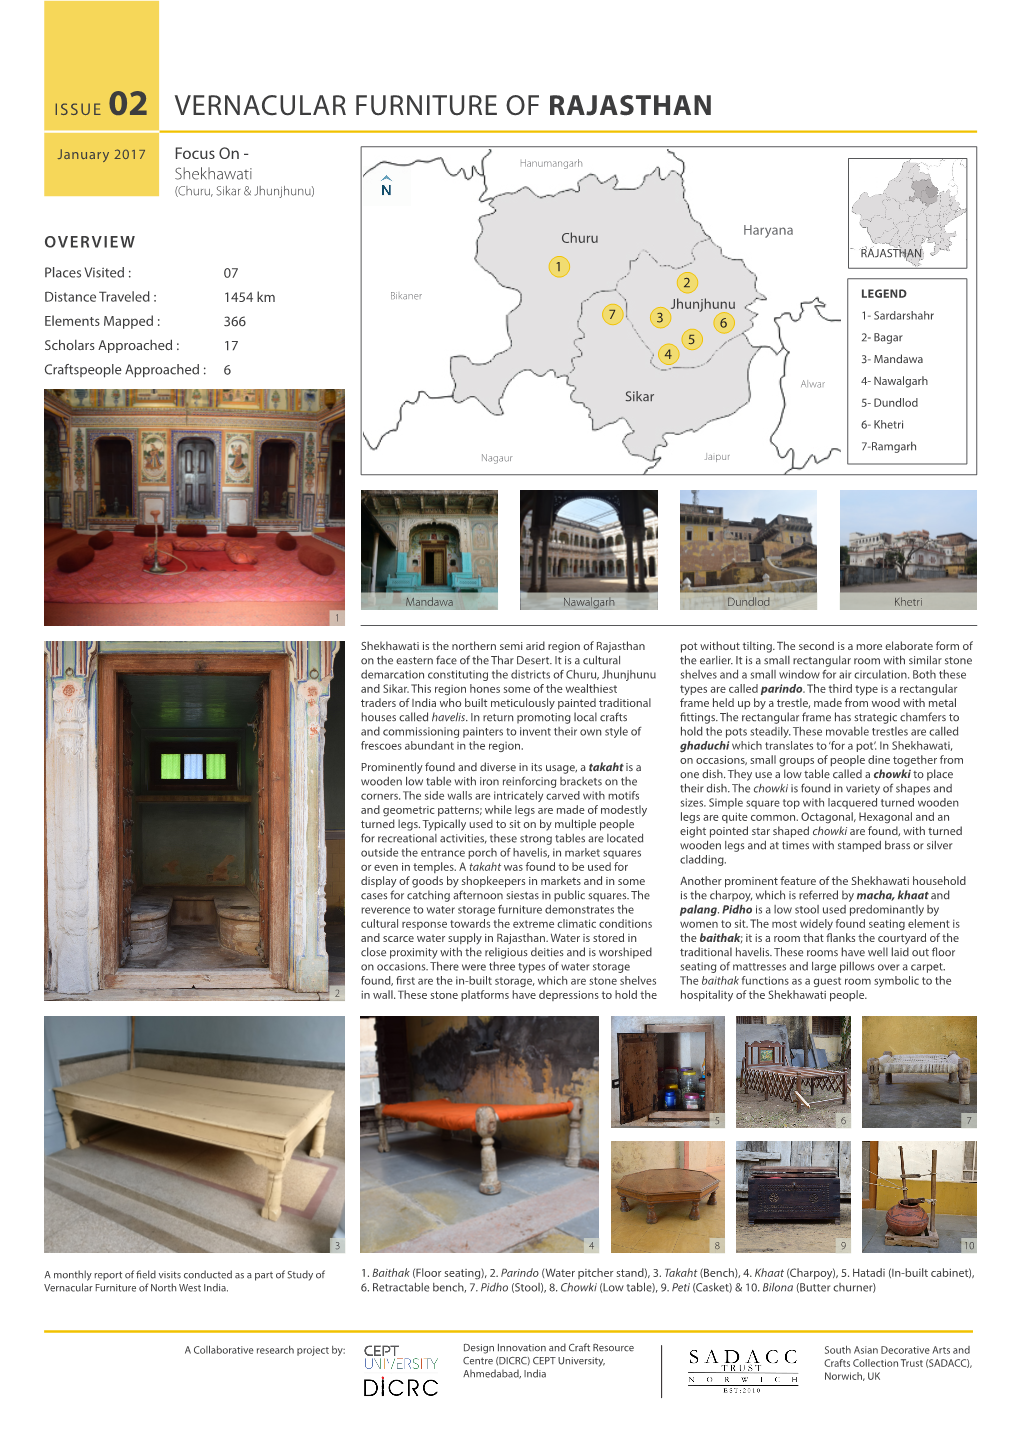 Vernacular Furniture of Rajasthan